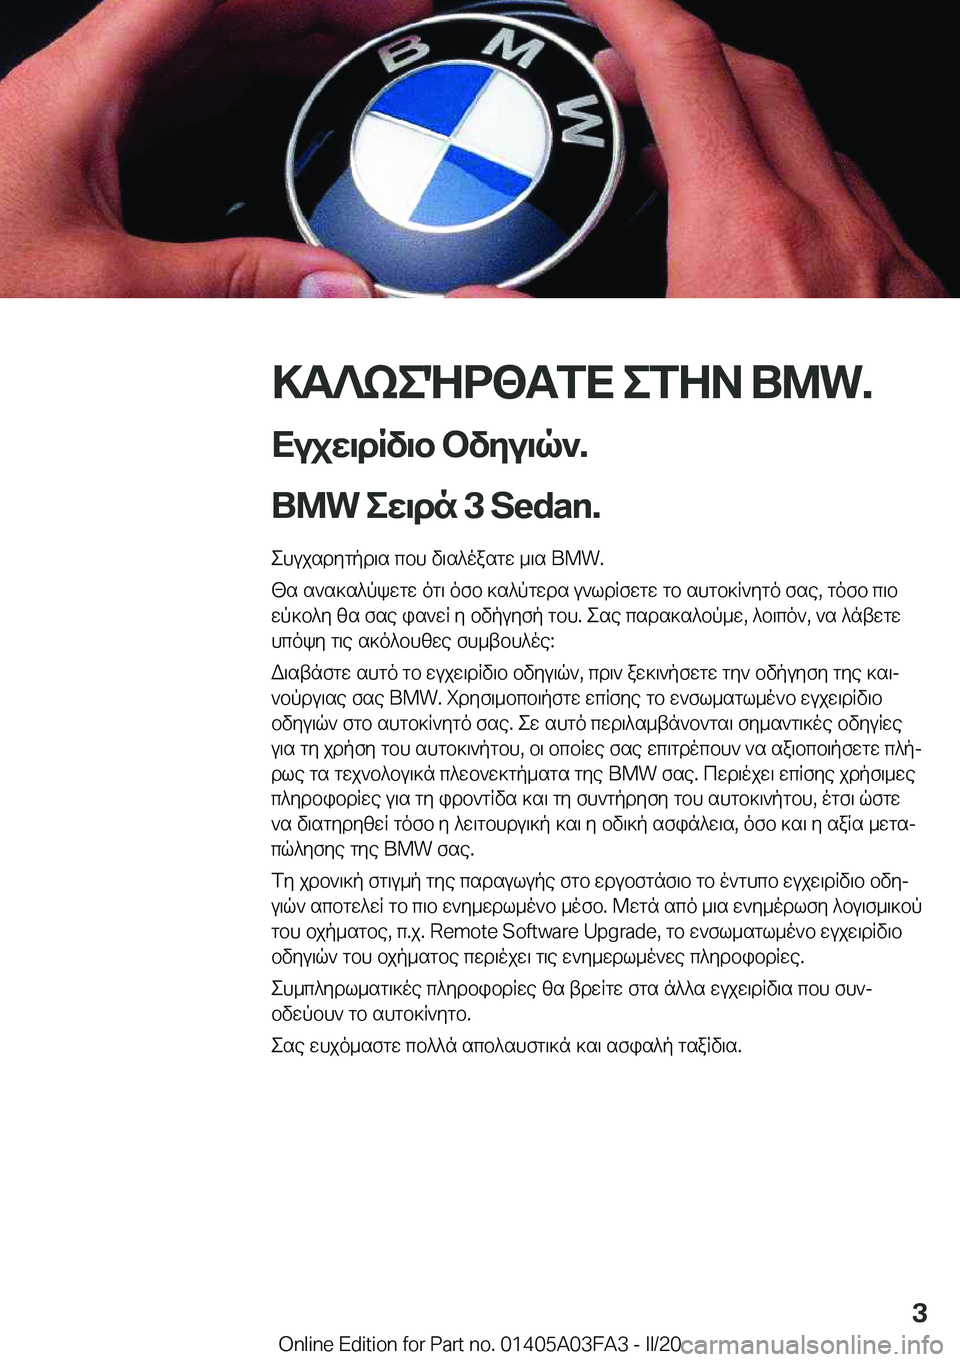 BMW 3 SERIES 2020  ΟΔΗΓΌΣ ΧΡΉΣΗΣ (in Greek) >T?keNd<TfX�efZA��B�M�W�.
Xujw\dRv\b�bvyu\q`�.
�B�M�W�ew\dn��3��S�e�d�a�n�. ehujsdygpd\s�cbh�v\s^oasgw�_\s��B�M�W�.[s�s`